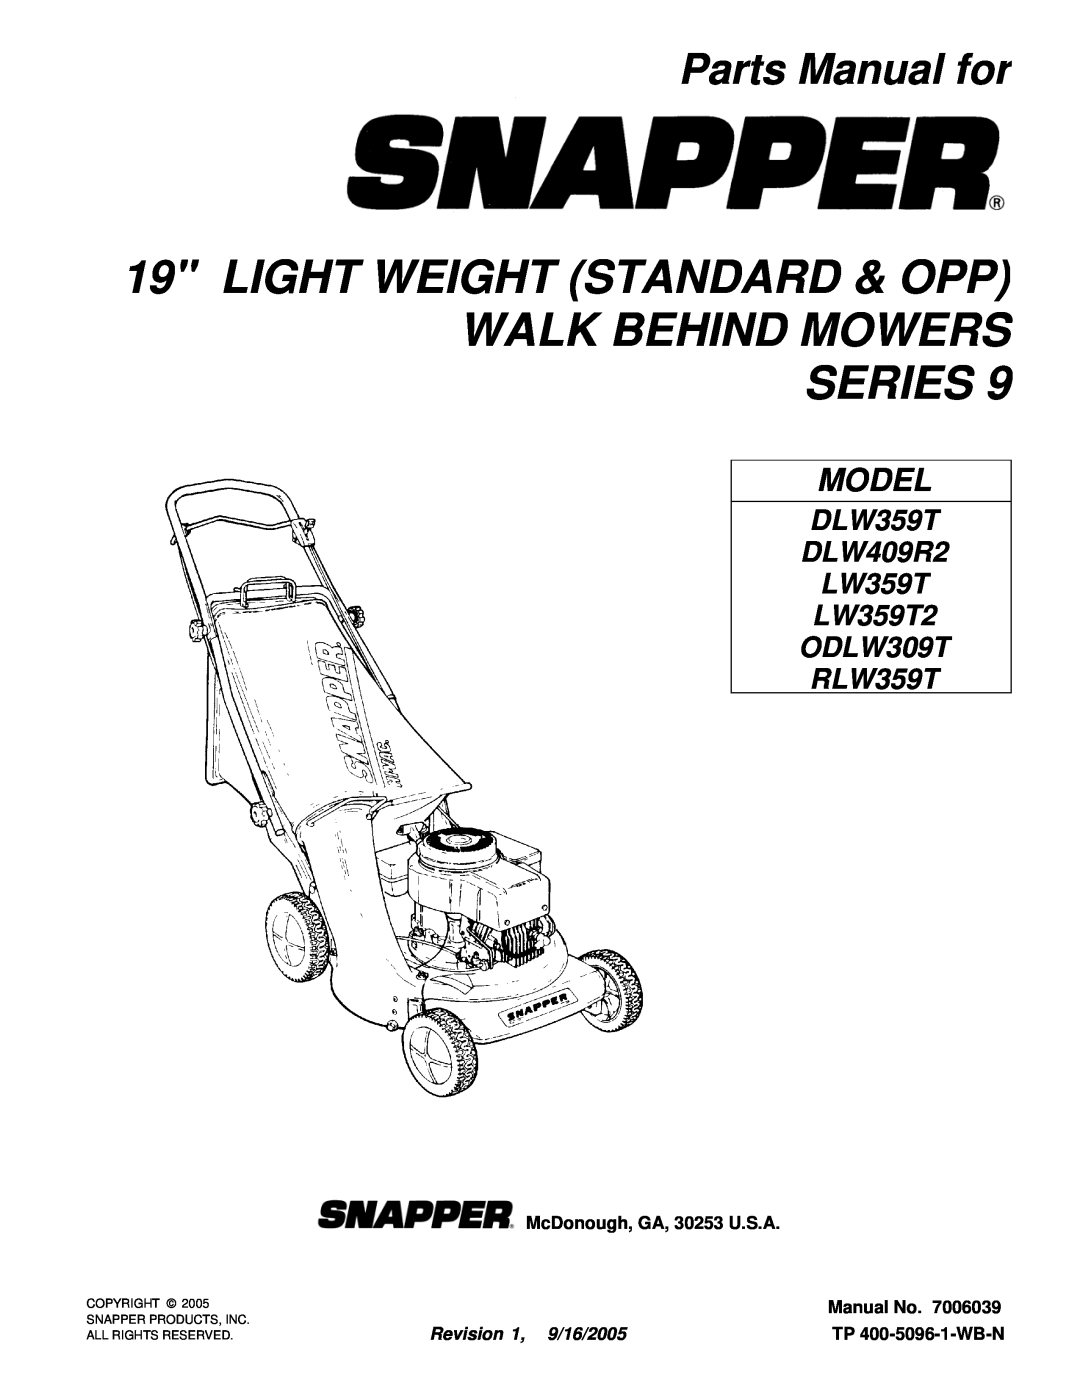 Snapper LW359T manual Light Weight Standard & Opp Walk Behind Mowers Series, Parts Manual for, McDonough, GA, 30253 U.S.A 